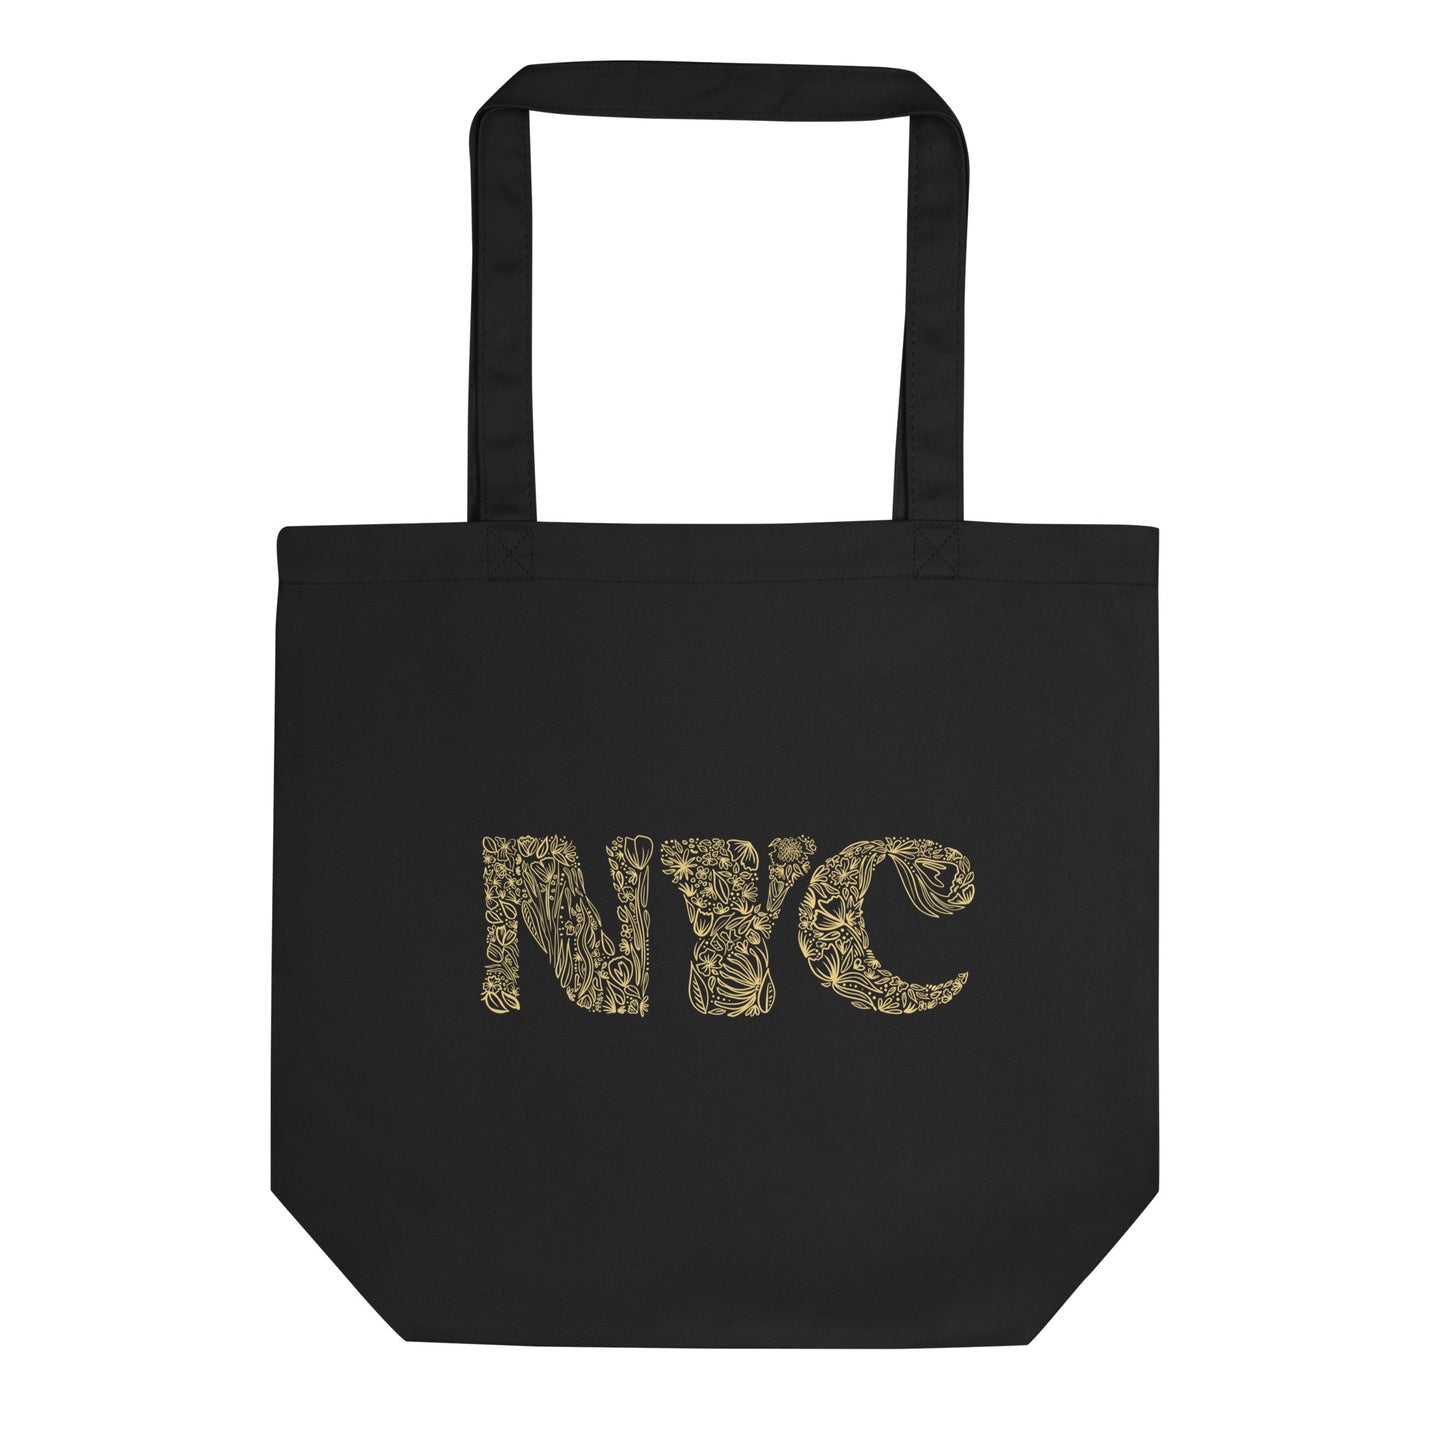 Bloomin' NYC Eco Tote Bag